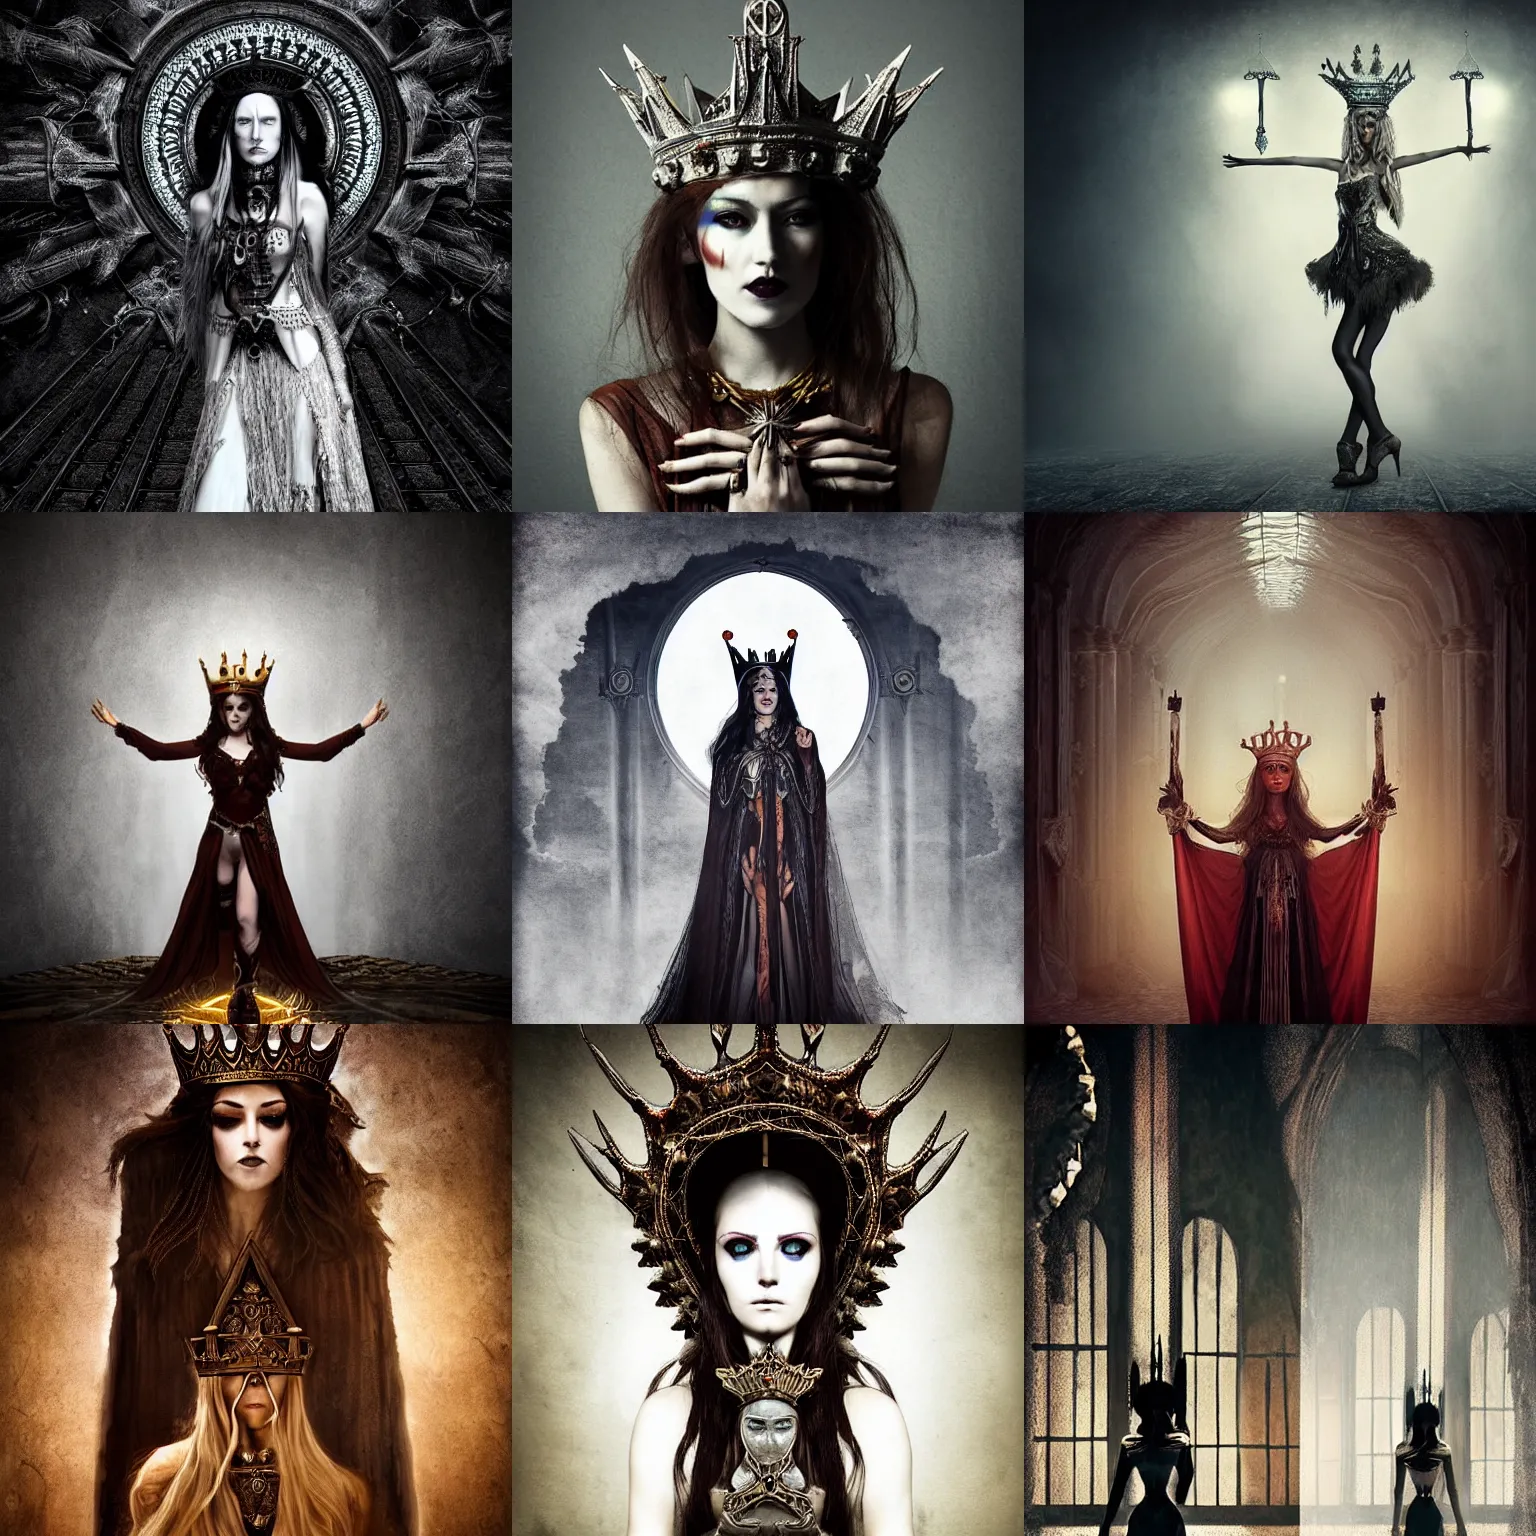 Prompt: Beautiful and symmetrical priestess wearing heels and rusty crown, dark fantasy art, cinematic lighting